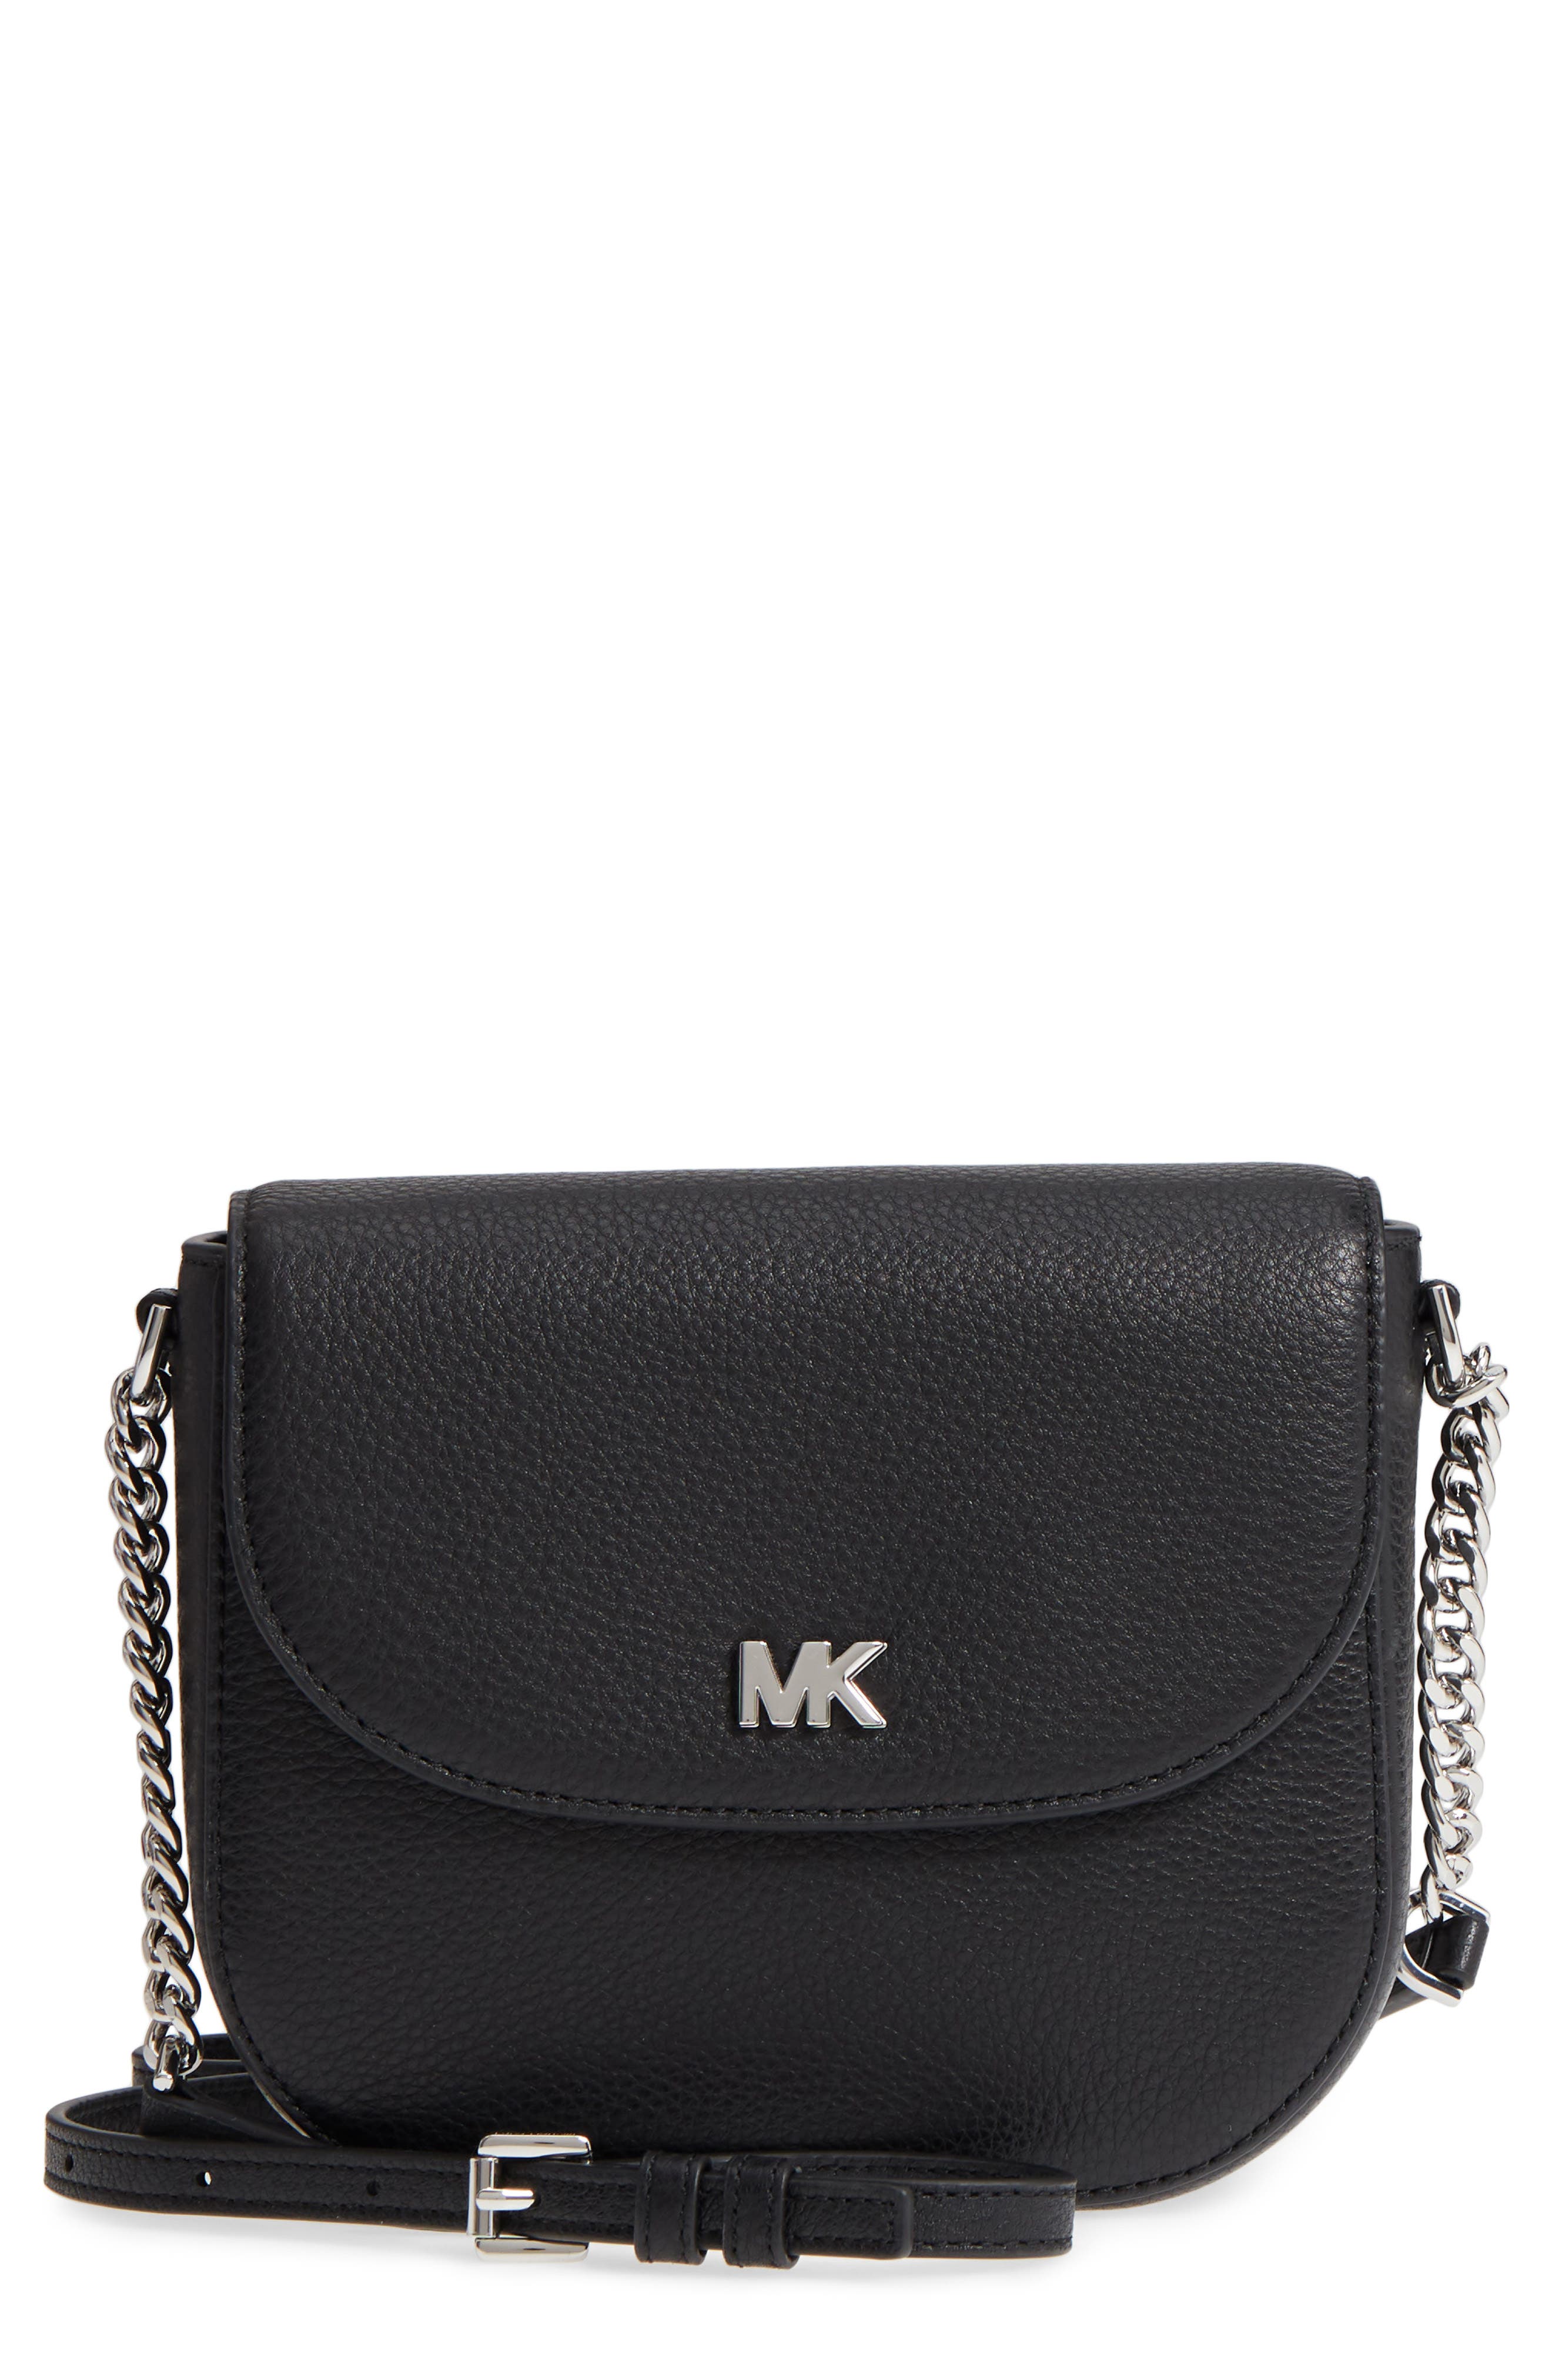 mk leather crossbody